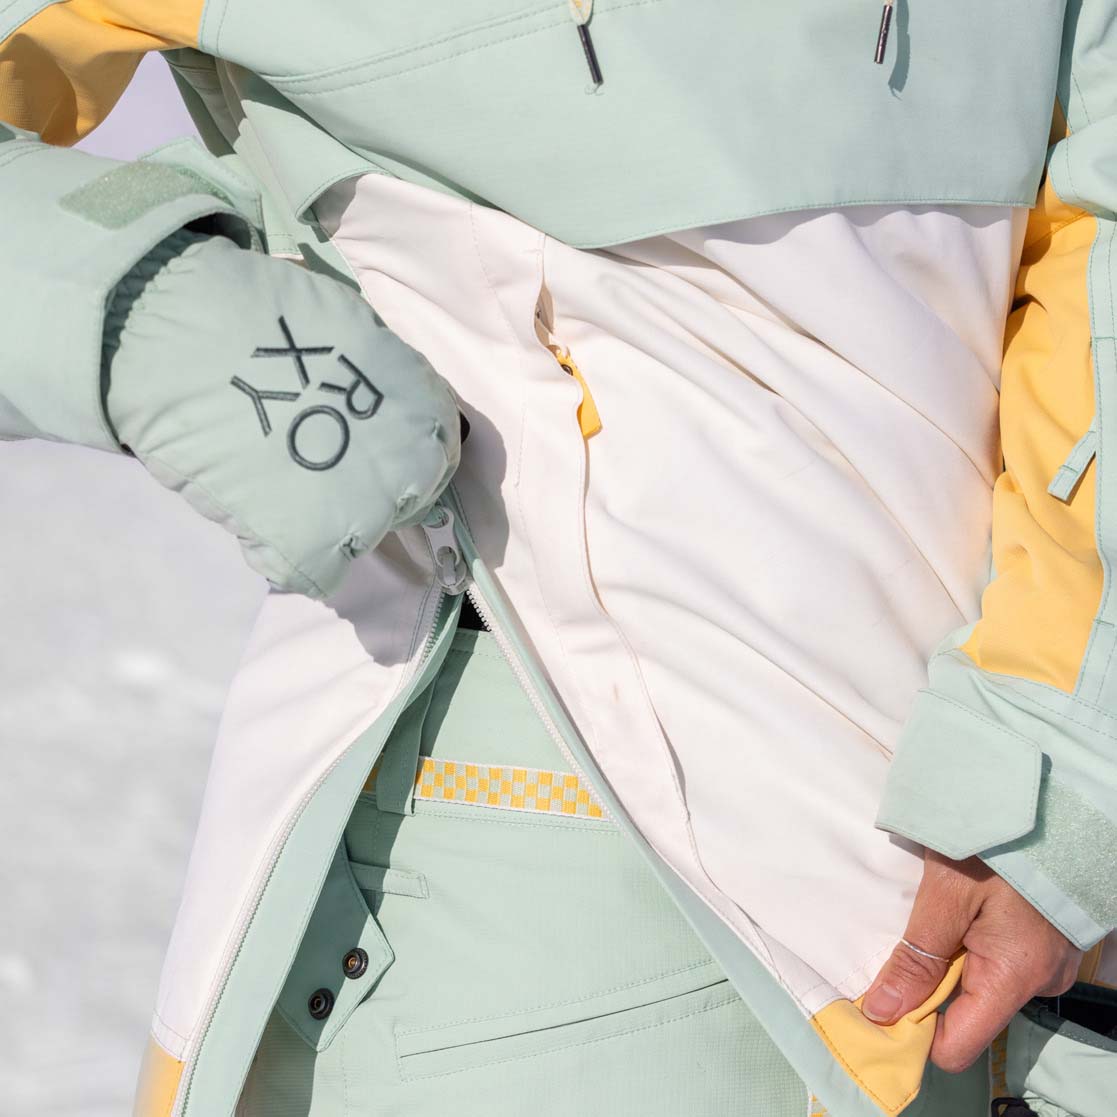 Roxy Shelter Women's Snowboard/Ski Jacket